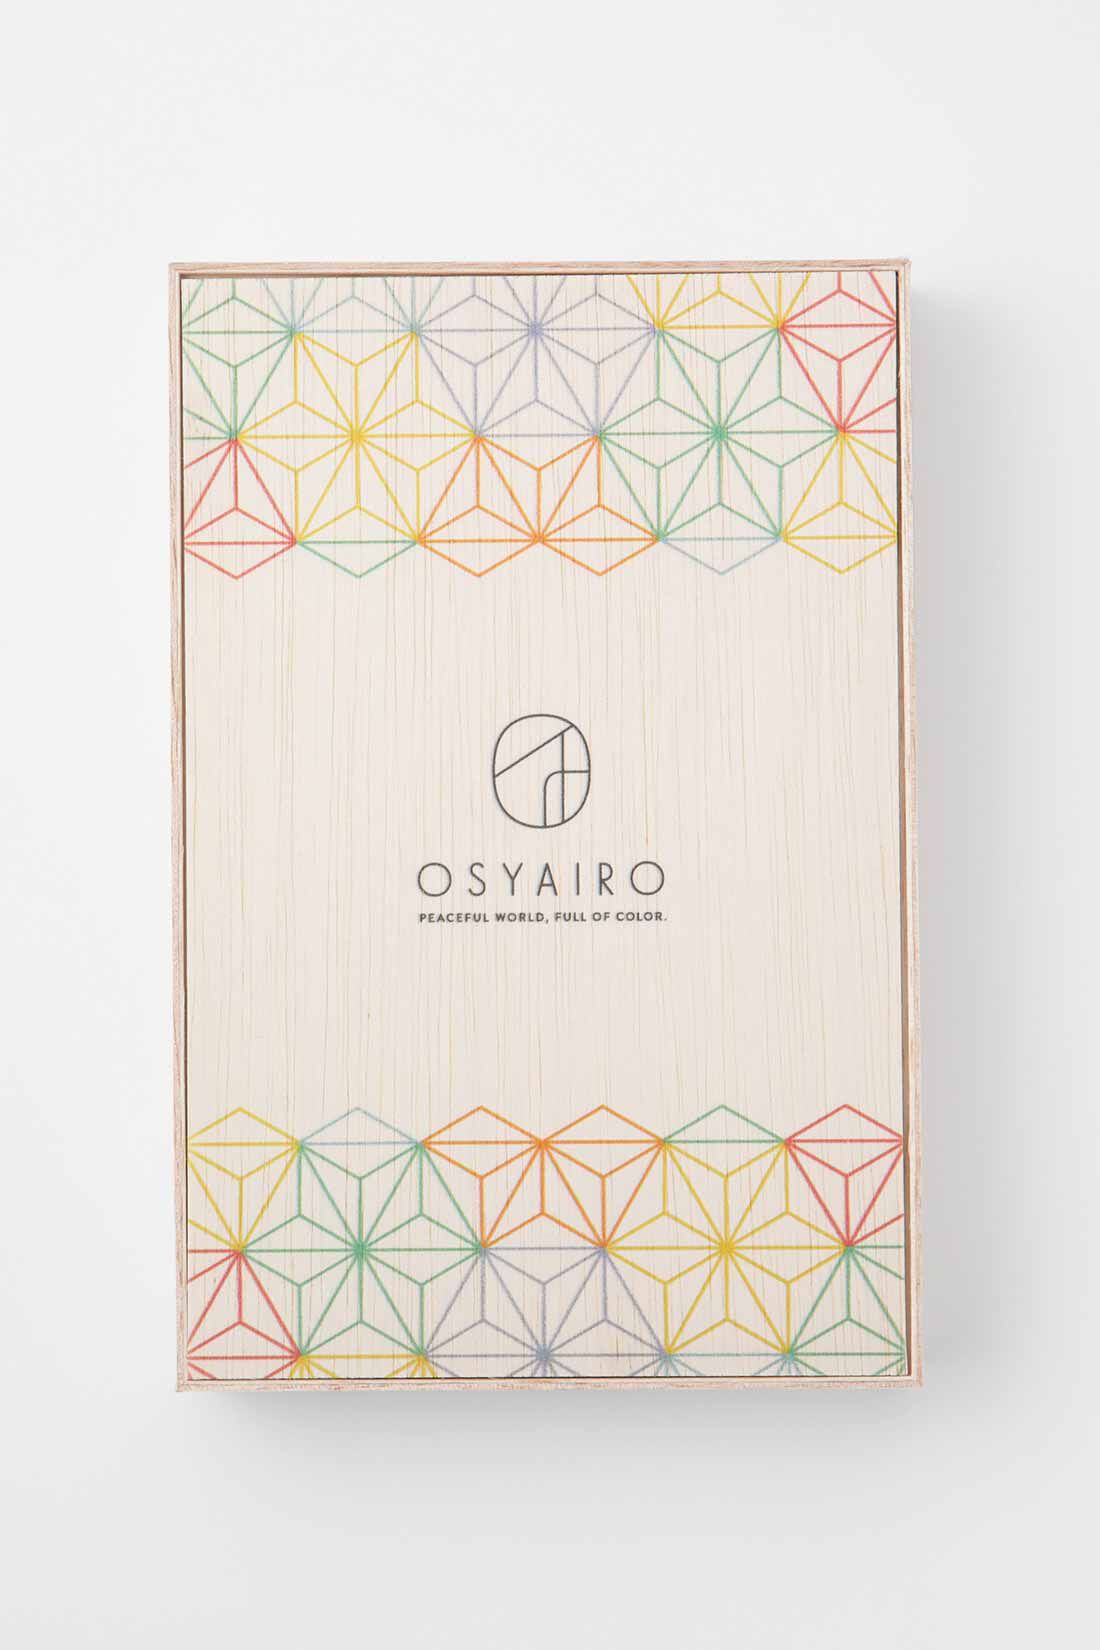 OSYAIRO|OSYAIRO 6つの色と風味を楽しむ三輪そうめん〈6色セット〉|木箱には、縁起のいい日本の伝統柄「麻の葉模様」を6色であしらいました。推しの活躍を祈る気持ちも込めて。